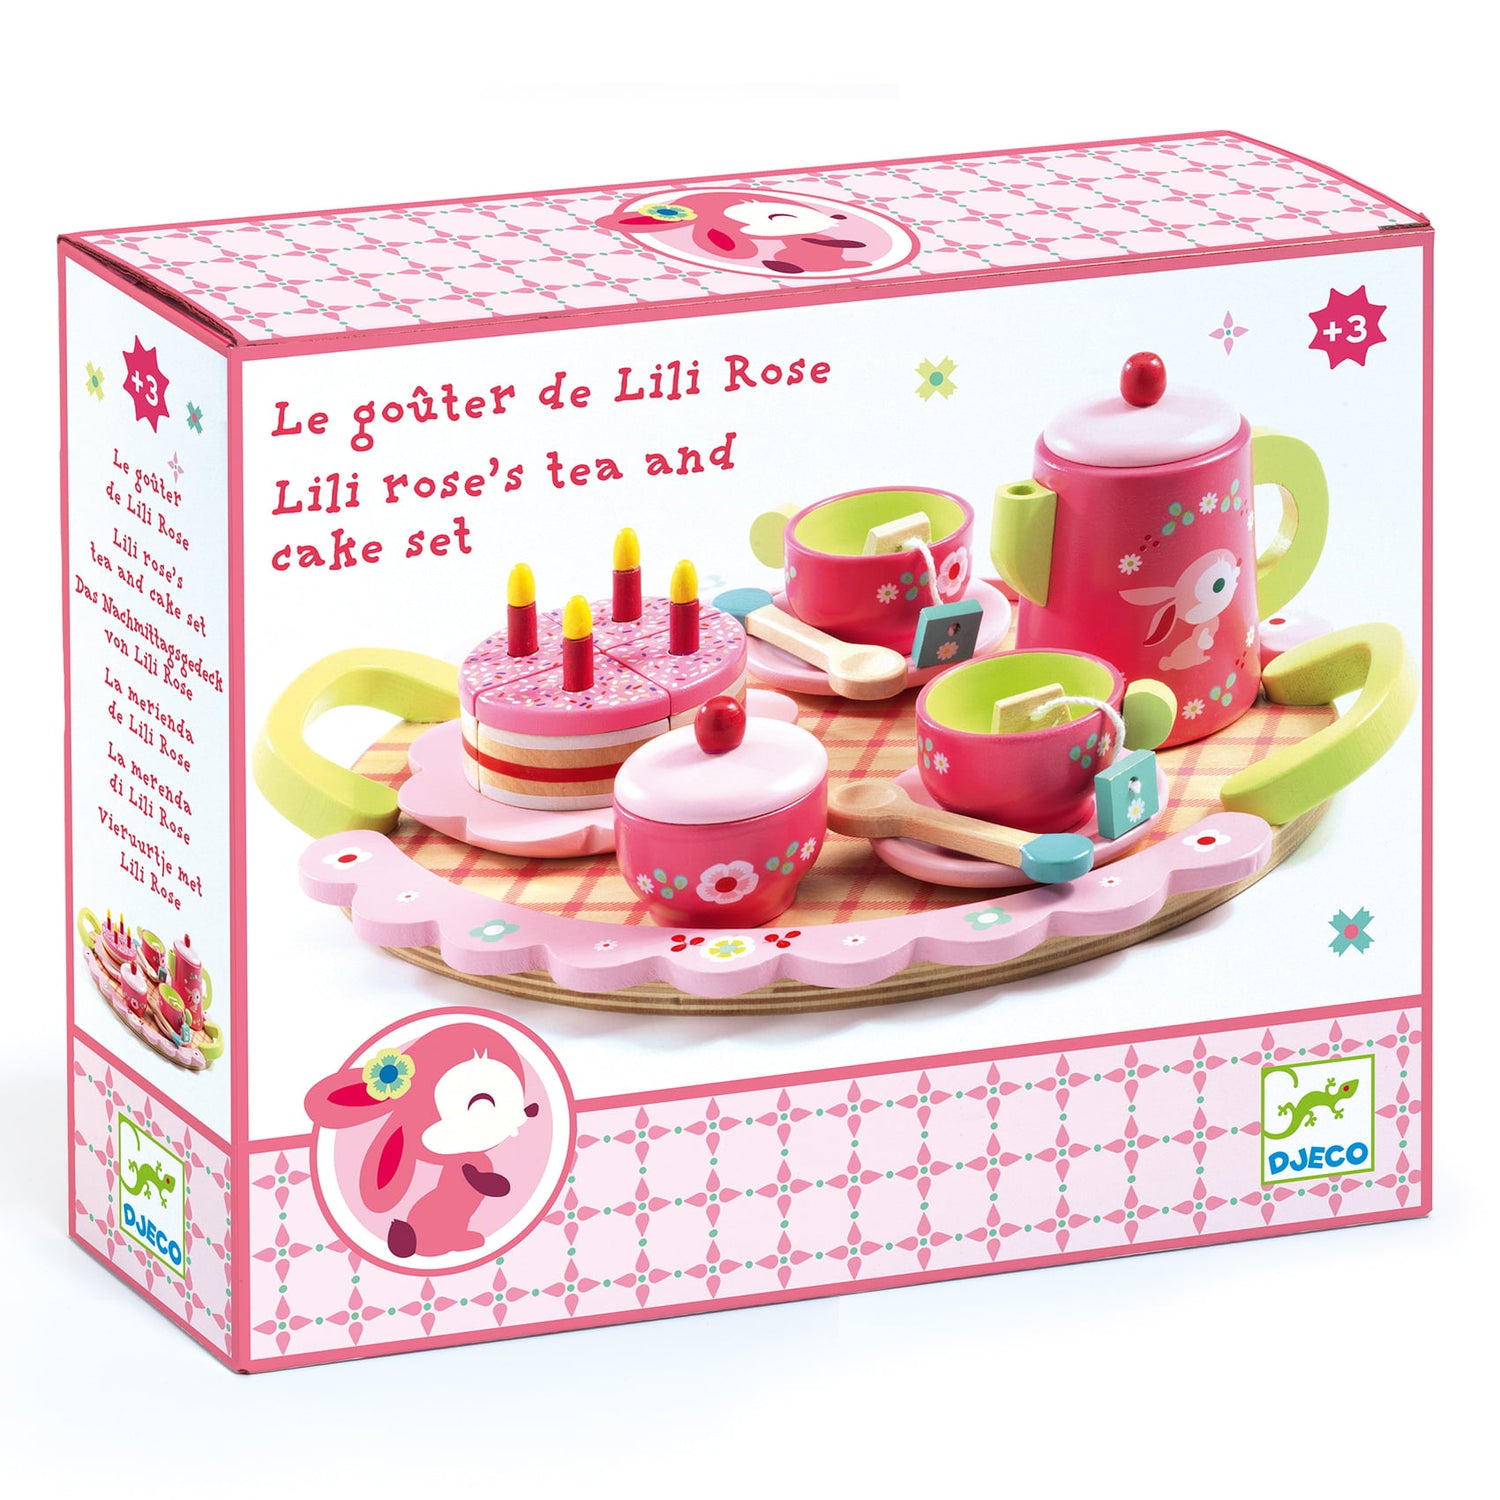 Lili rose's tea party set for kids